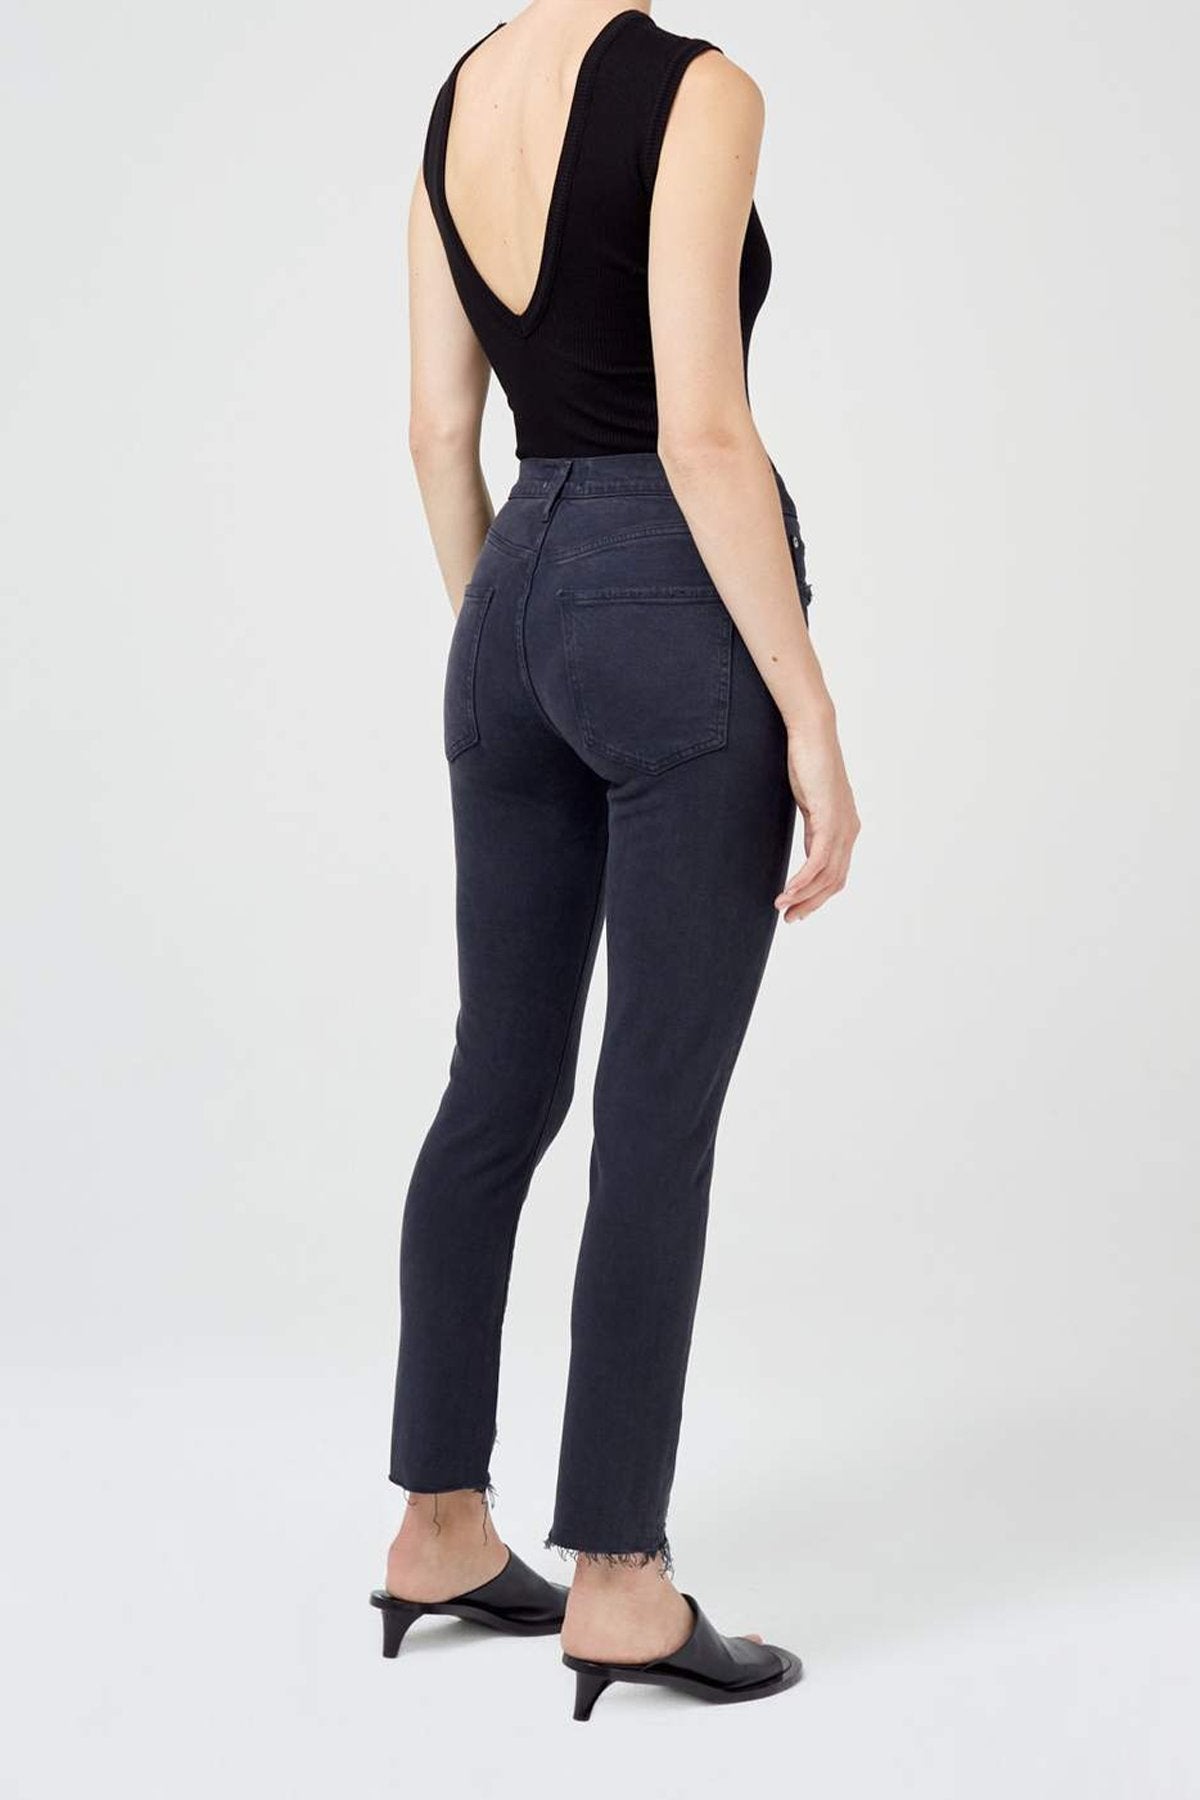 Toni Mid Rise Straight Jean in Feral - shop-olivia.com